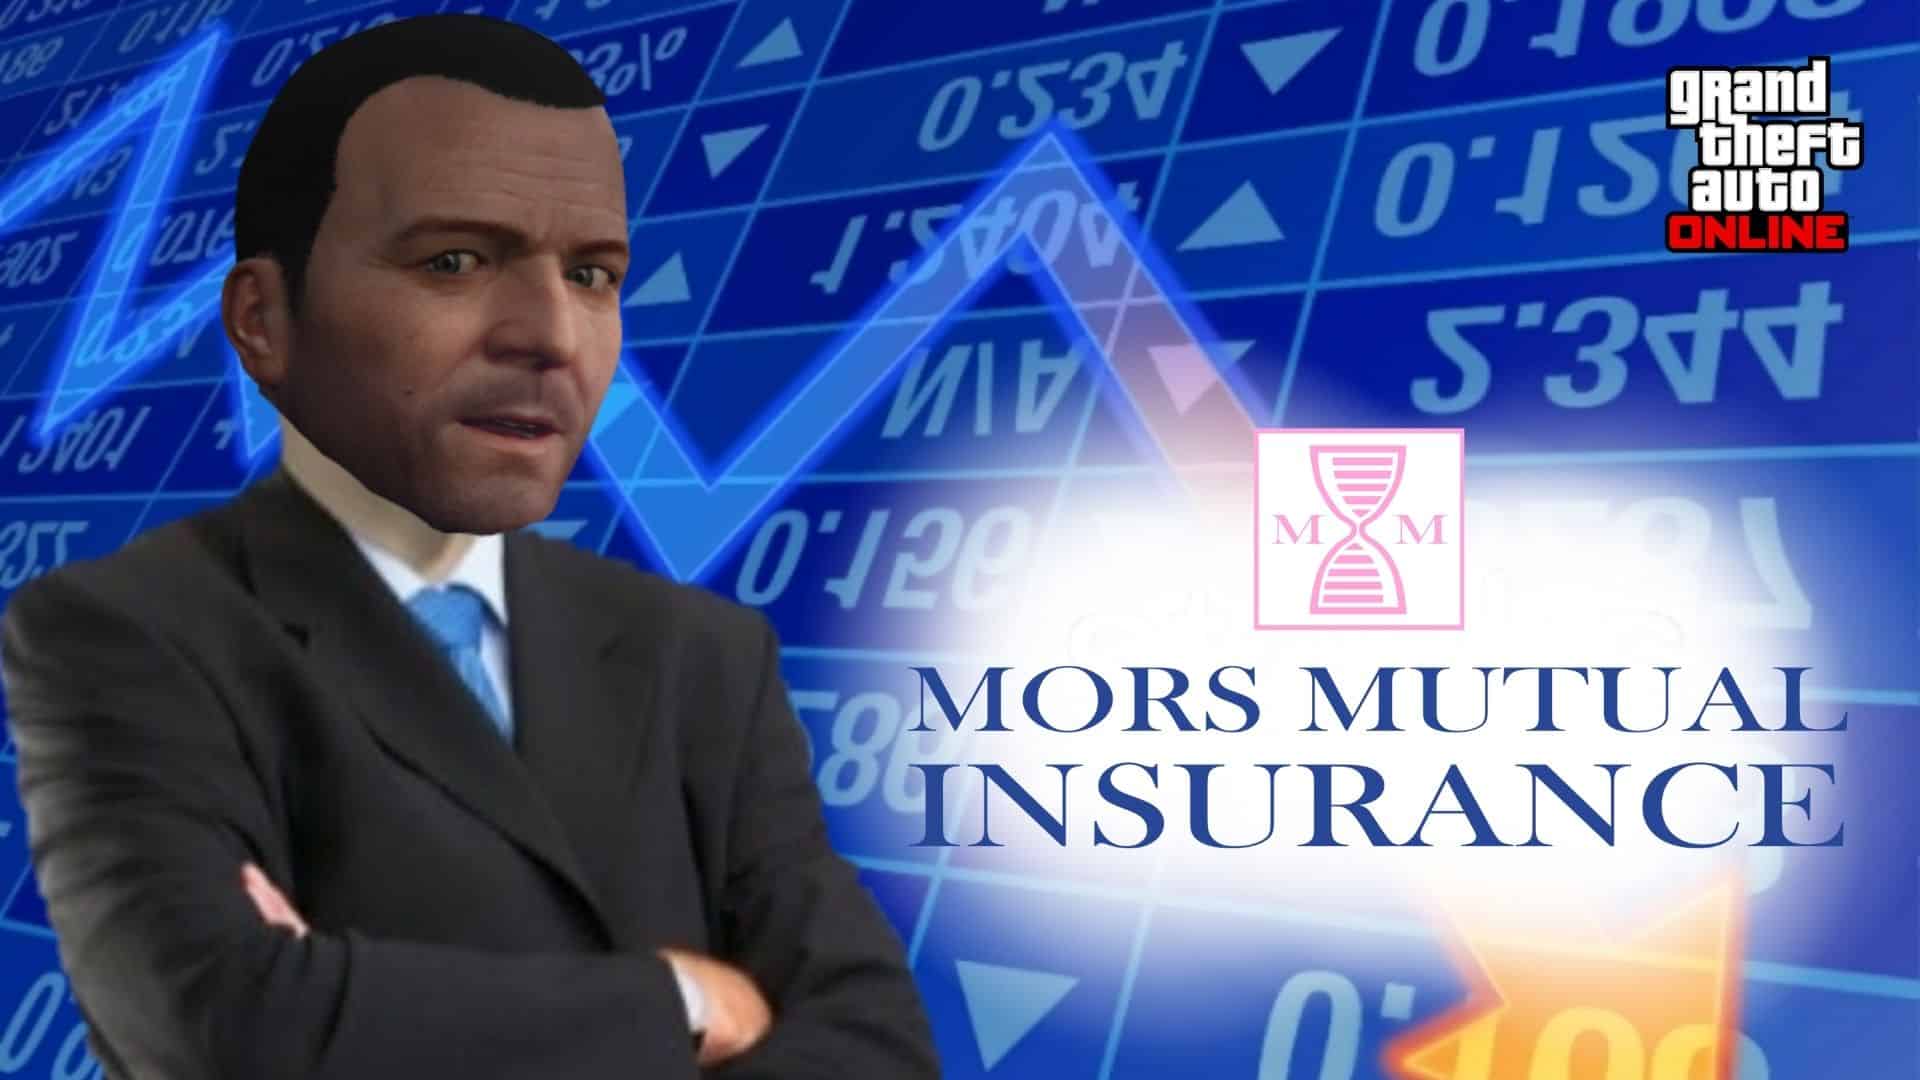 gta online mors mutual insurance